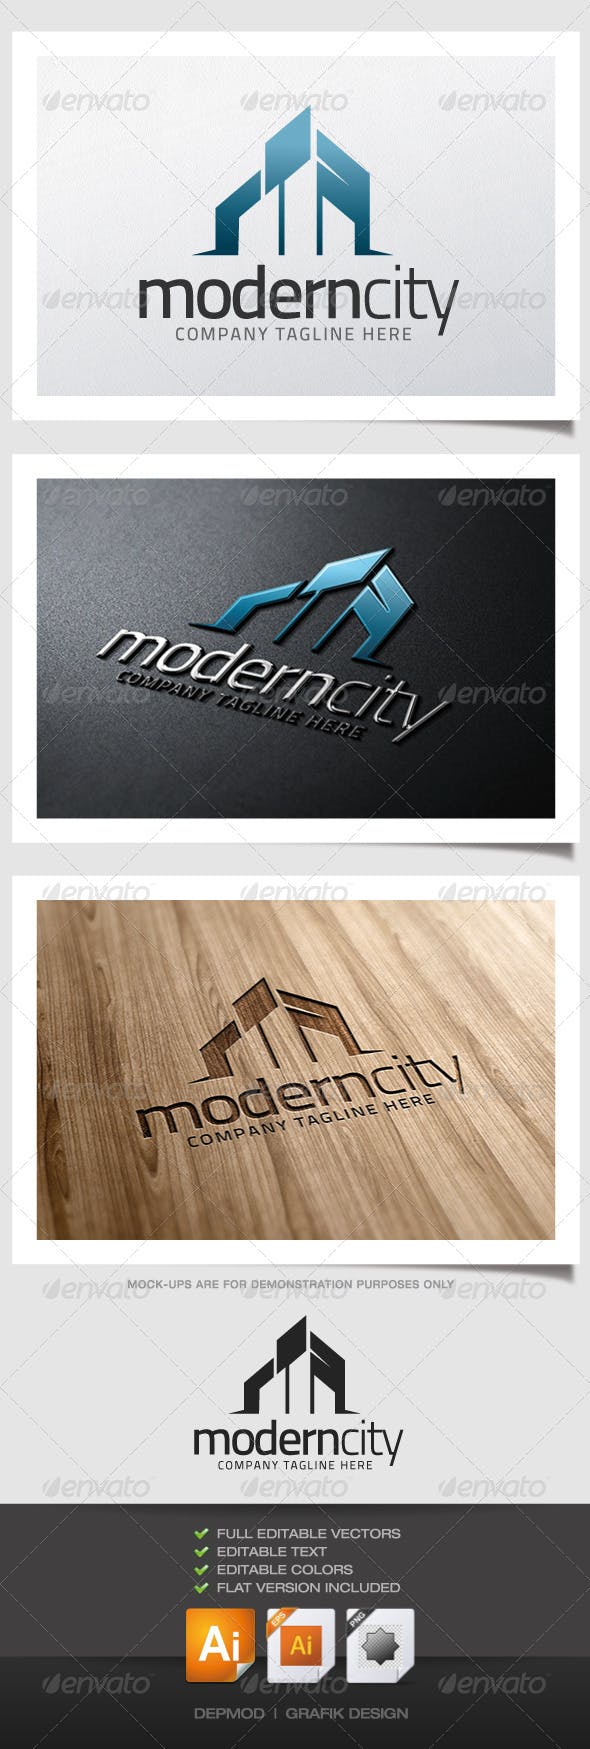 Modern City Logo - Modern City Logo by Opaq | GraphicRiver